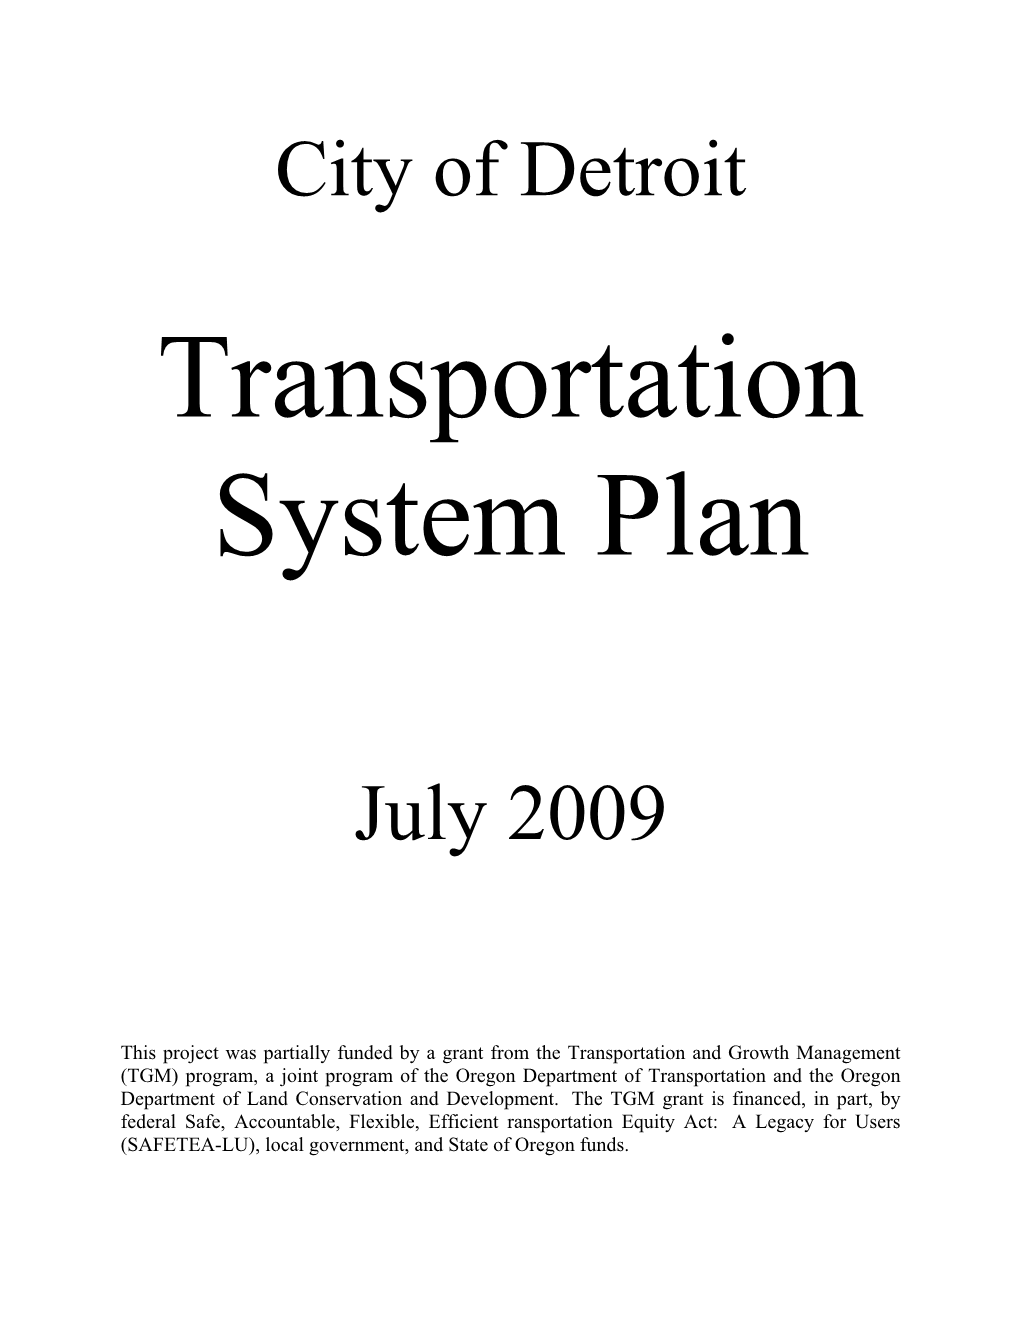 City of Detroit July 2009